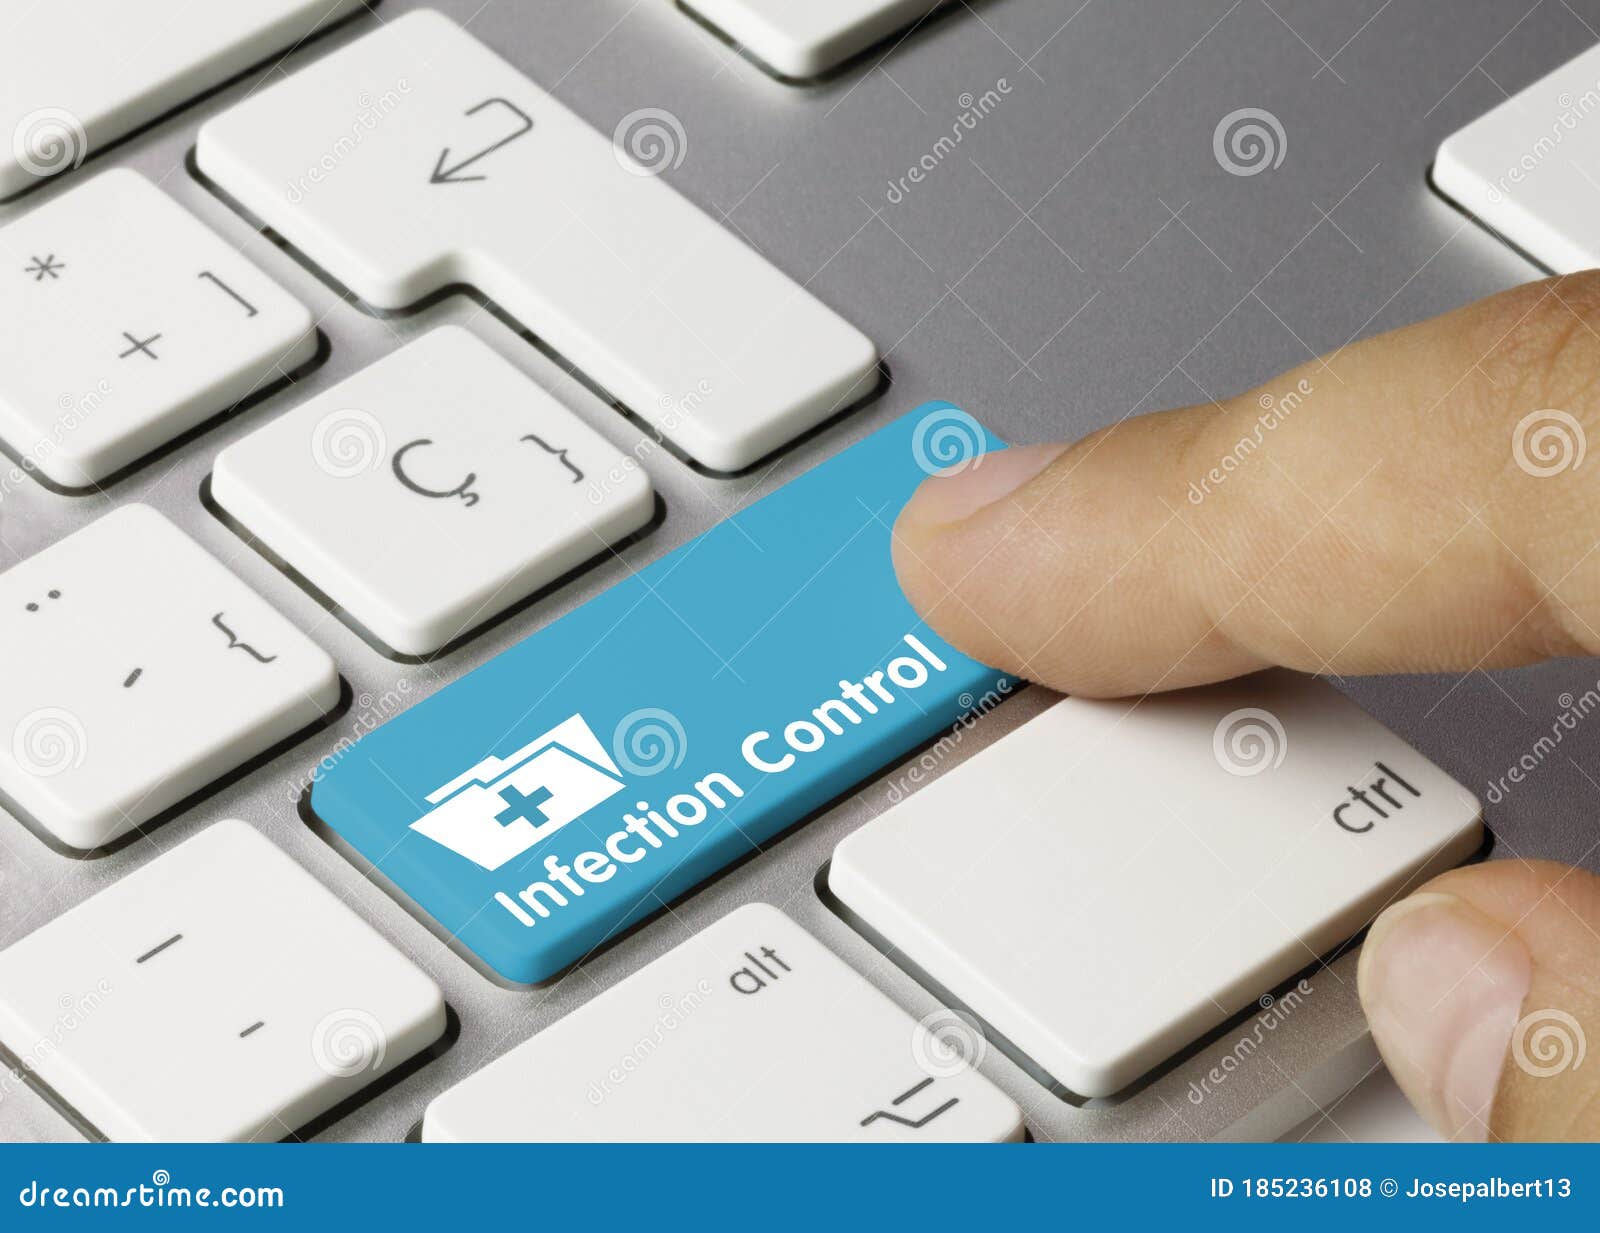 infection control - inscription on blue keyboard key